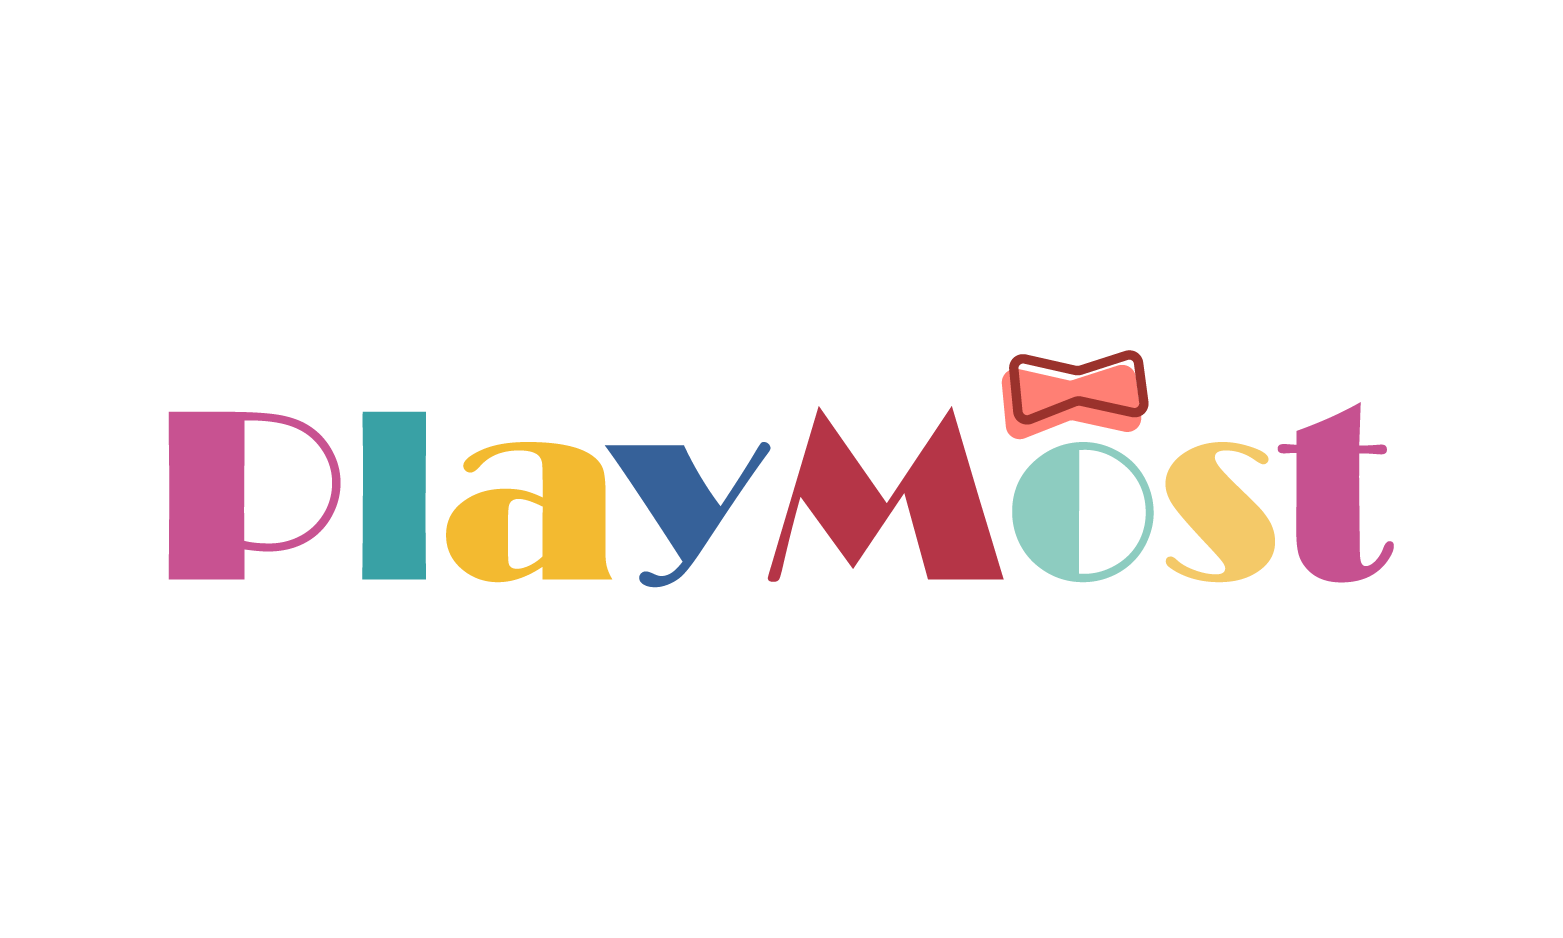 PlayMost.com - Creative brandable domain for sale